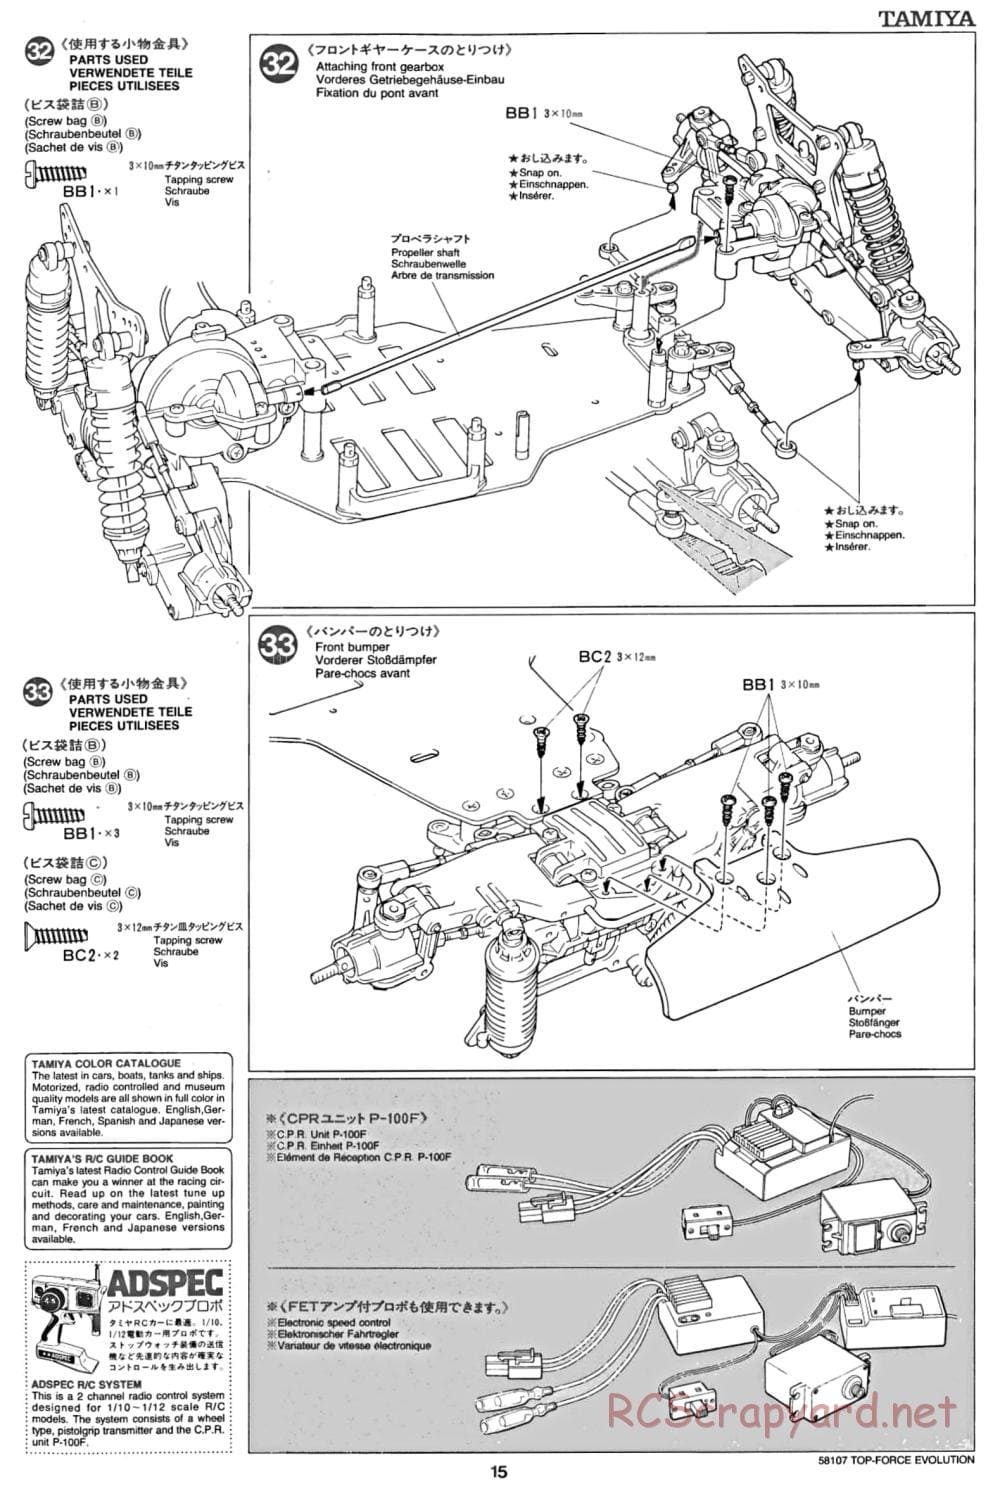 Tamiya - Top Force Evolution Chassis - Manual - Page 15